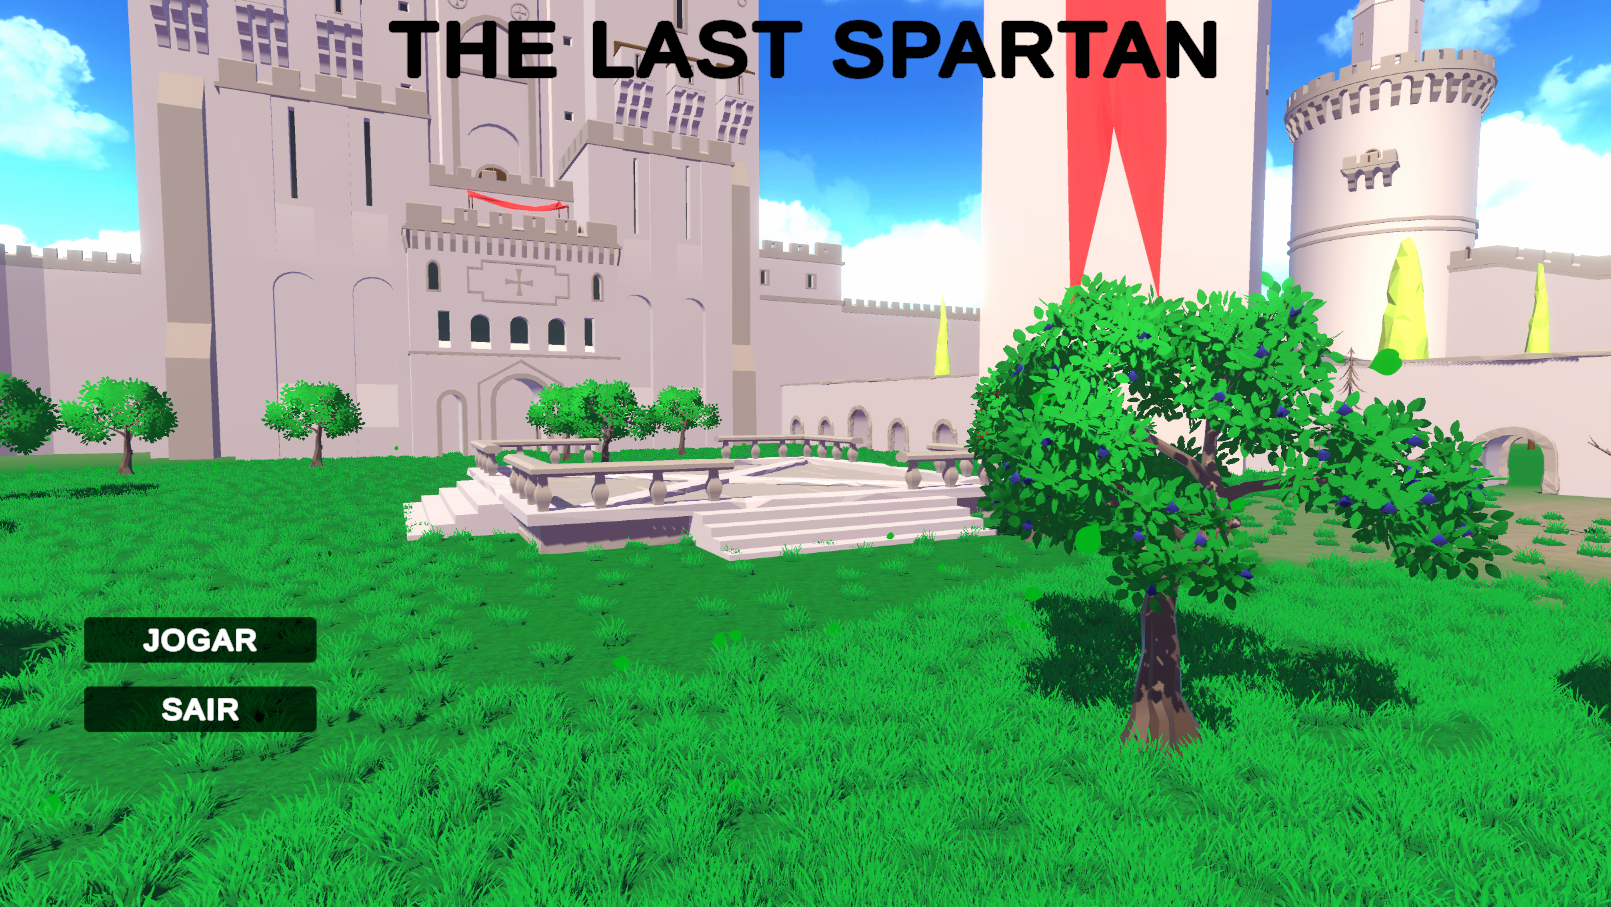 The Last Spartan